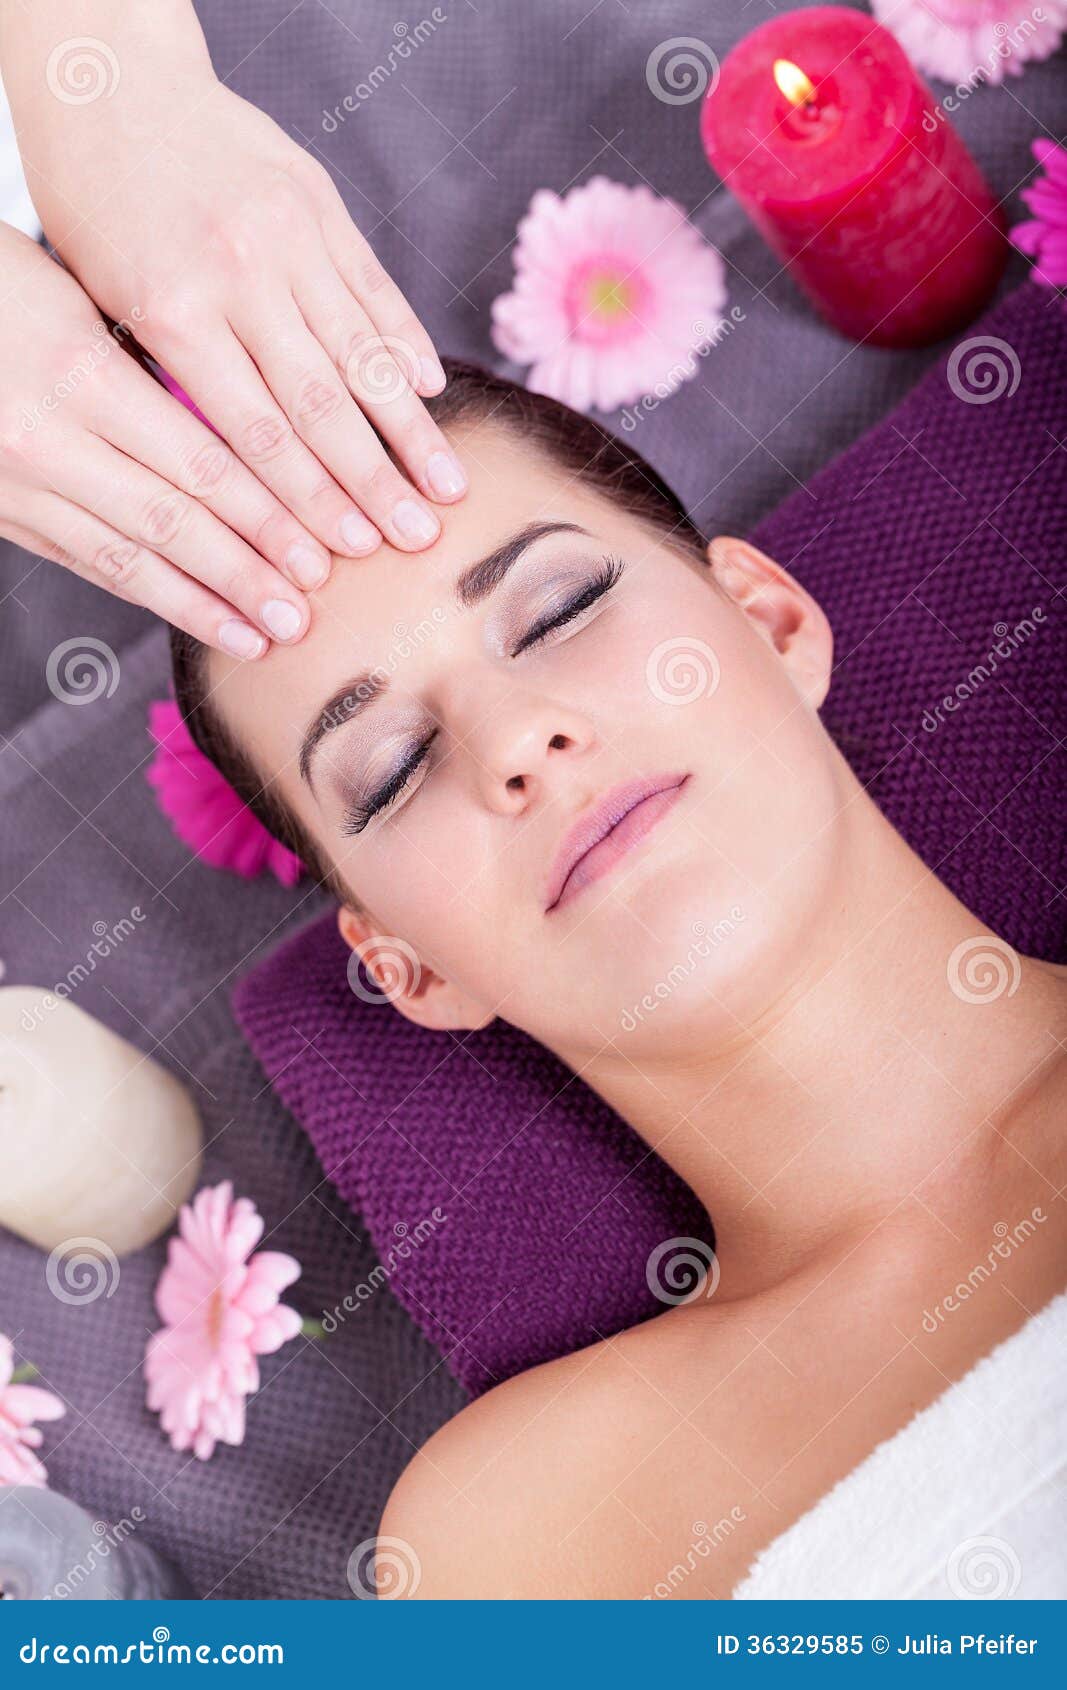 Woman Having A Relaxing Facial Massage Stock Image Image Of Gerbera Meditation 36329585